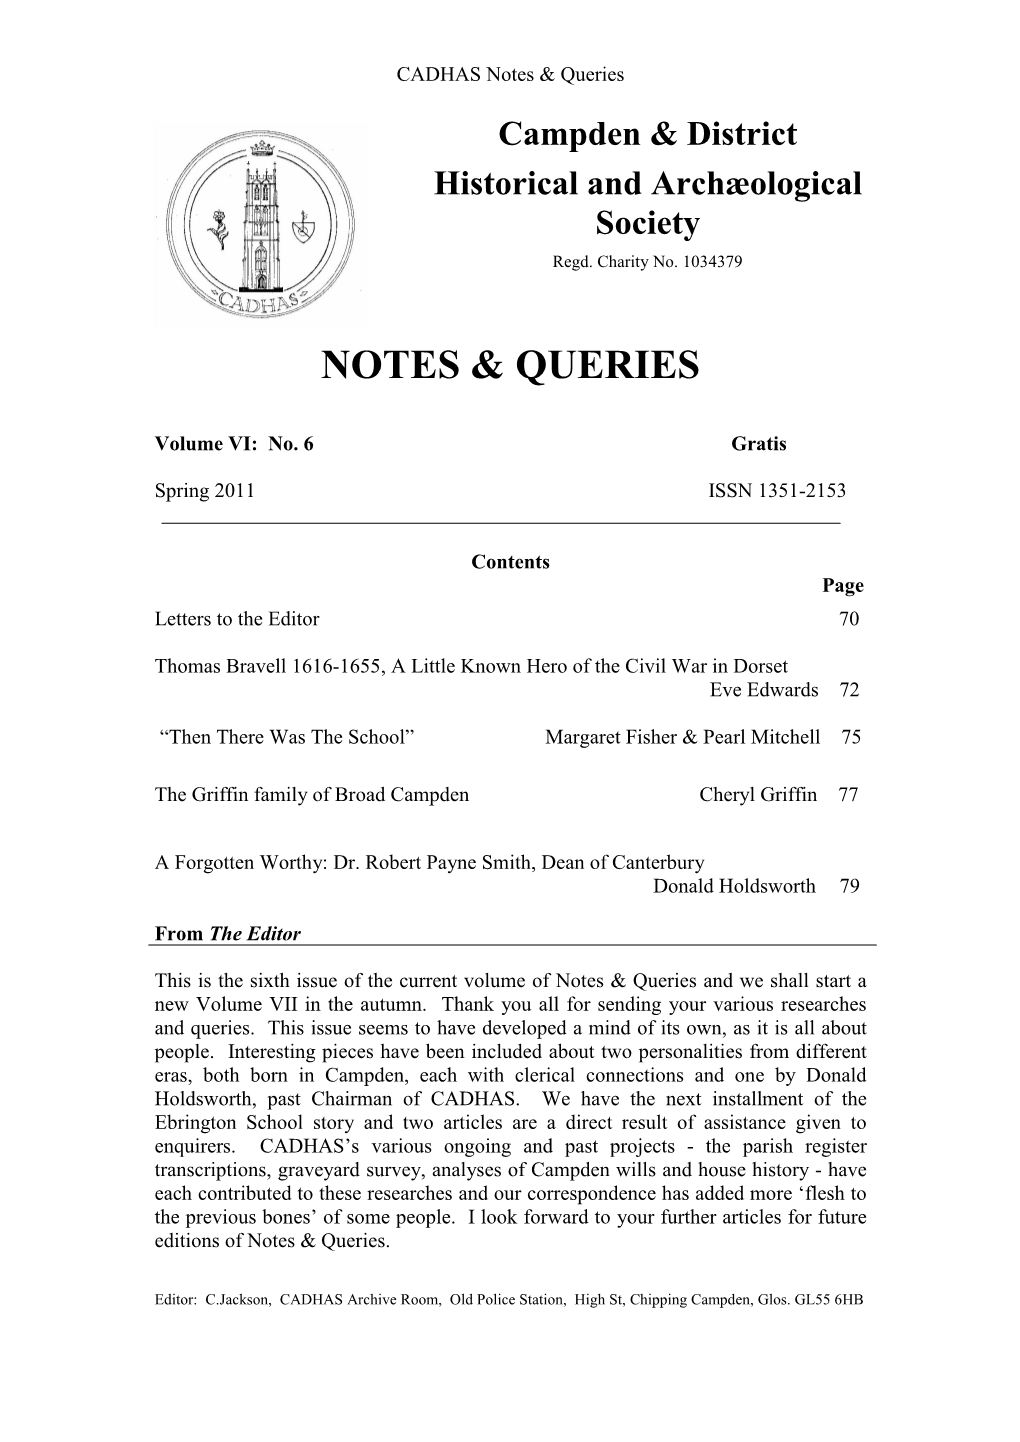 Notes & Queries Notes & Queries